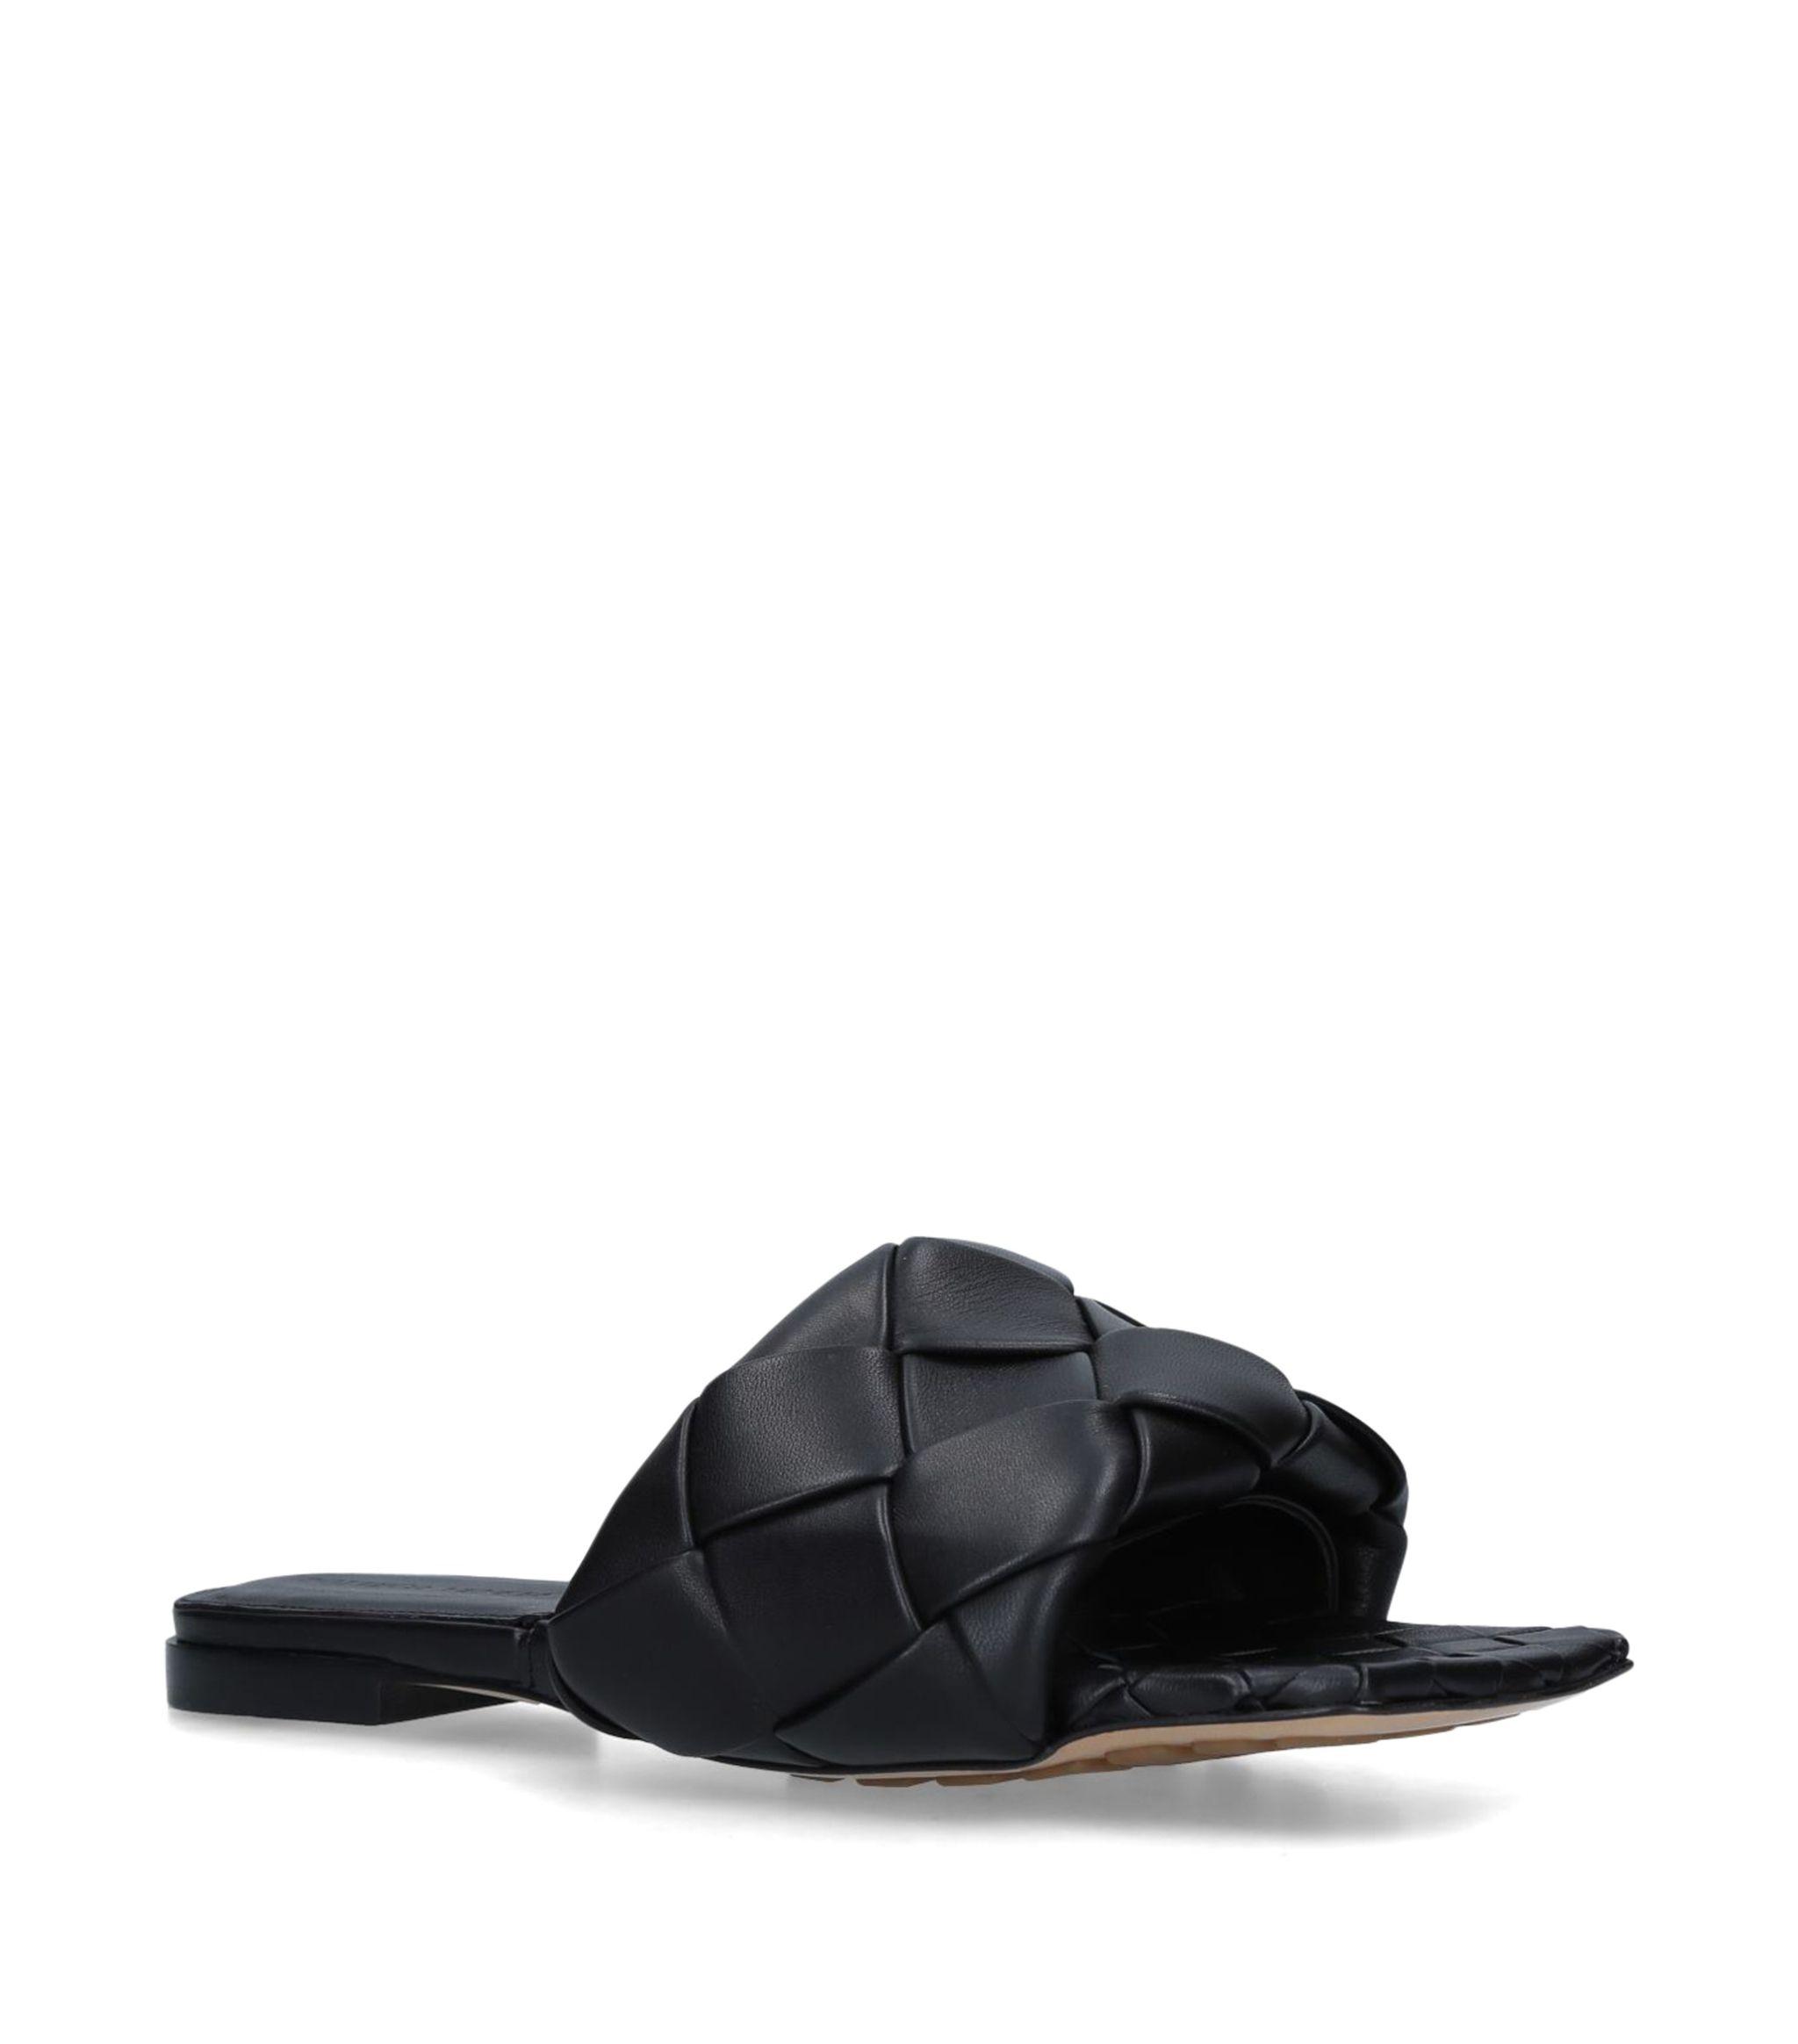 Bottega Veneta Bv Lido Flat Sandals in Black - Save 18% - Lyst